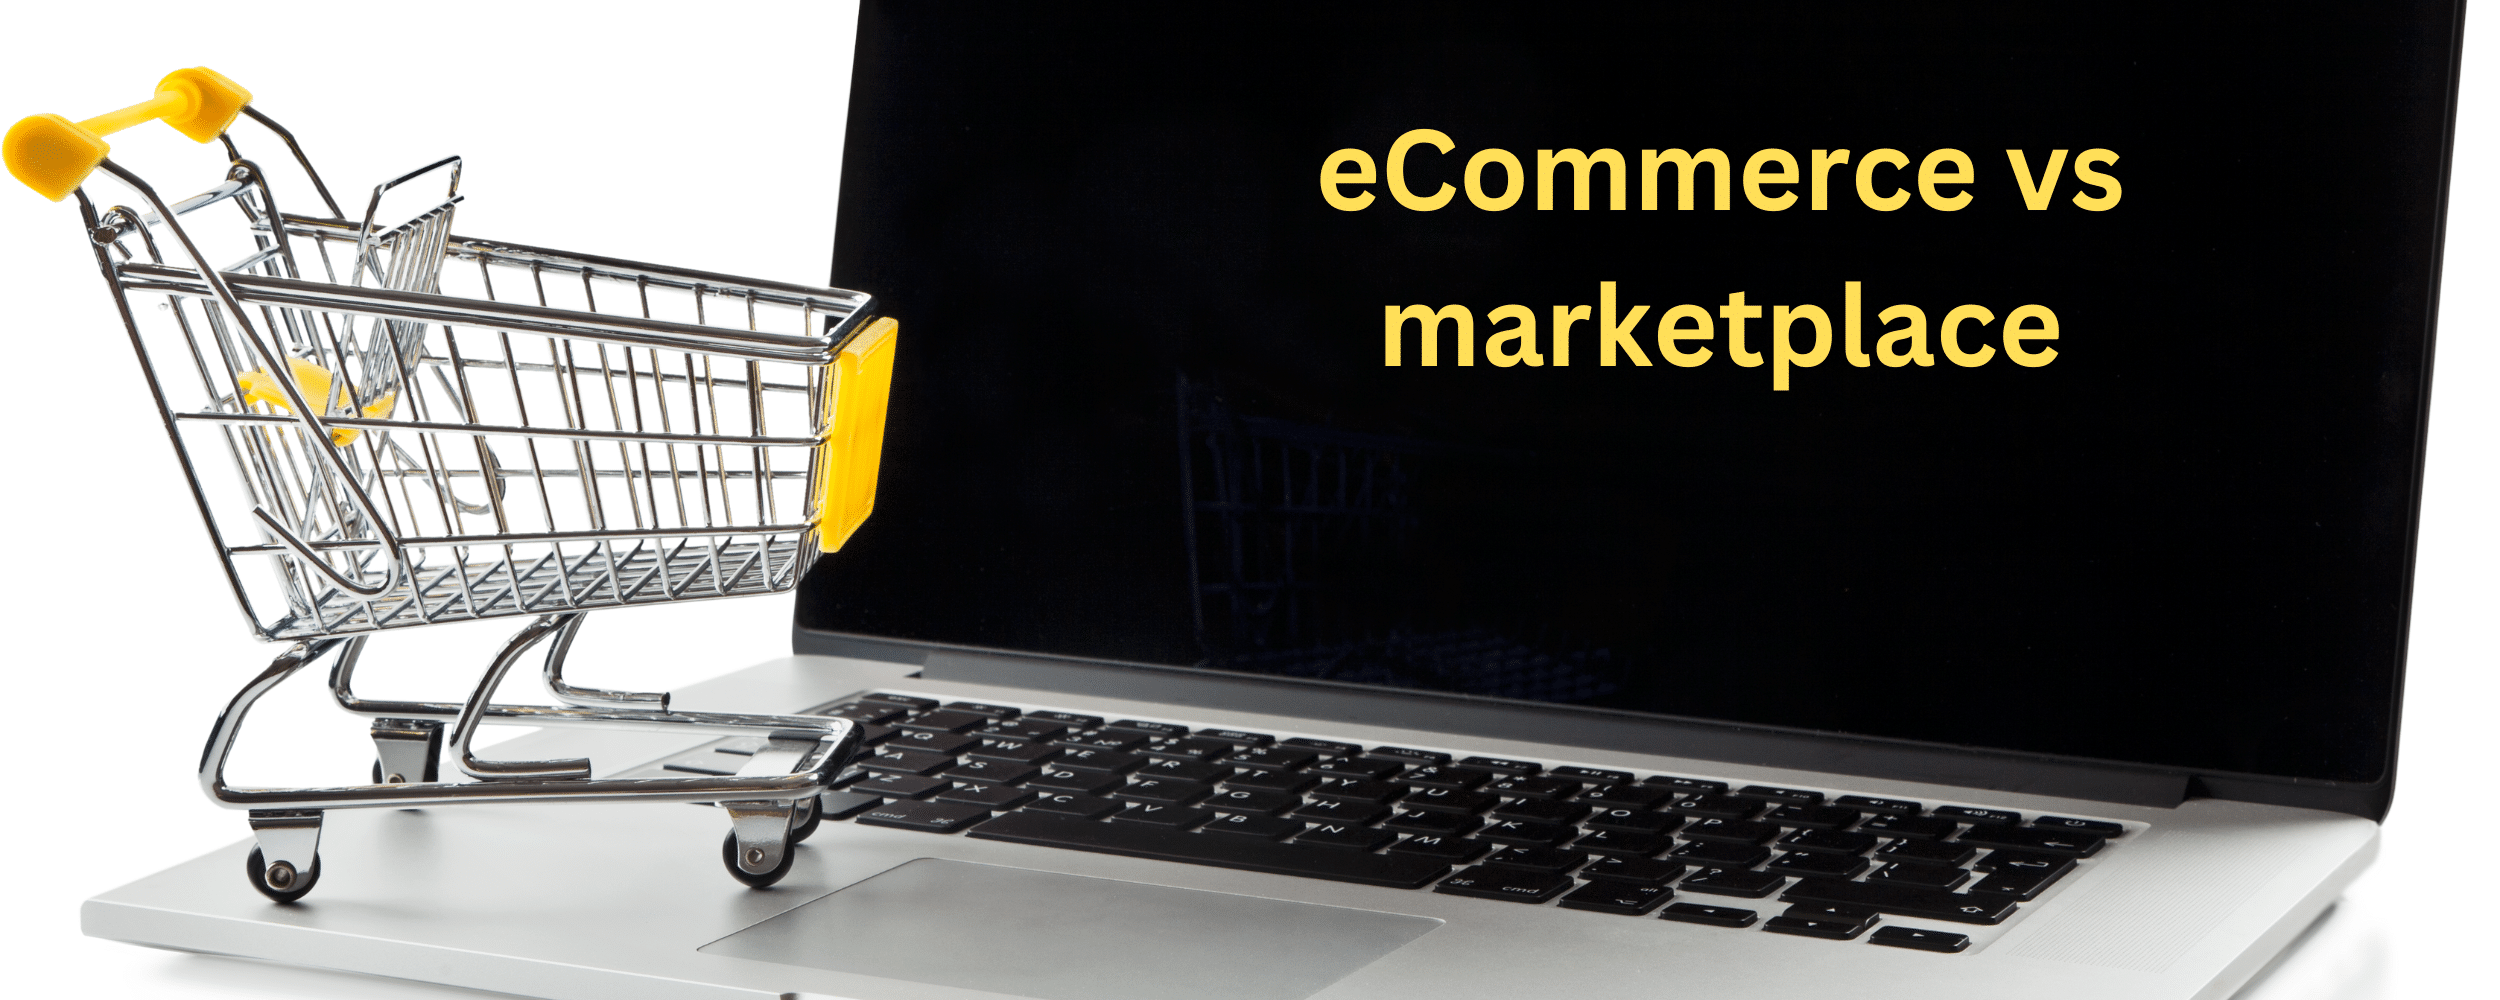 eCommerce vs marketplace